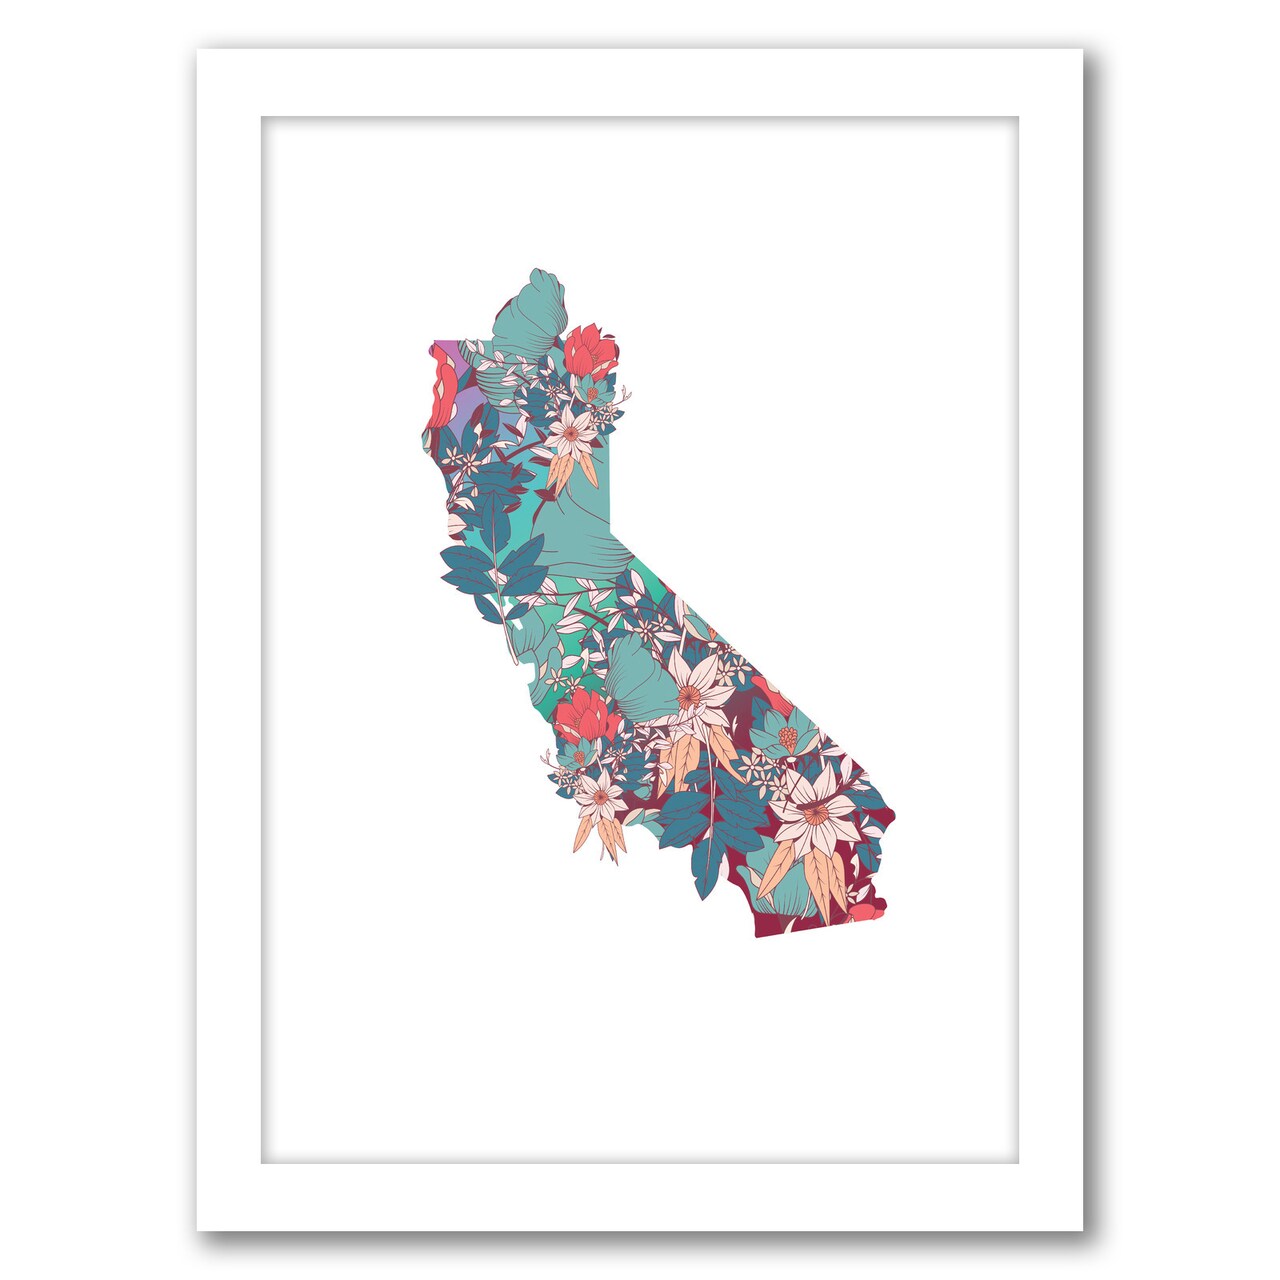 California Florals by Digital Keke Frame  - Americanflat